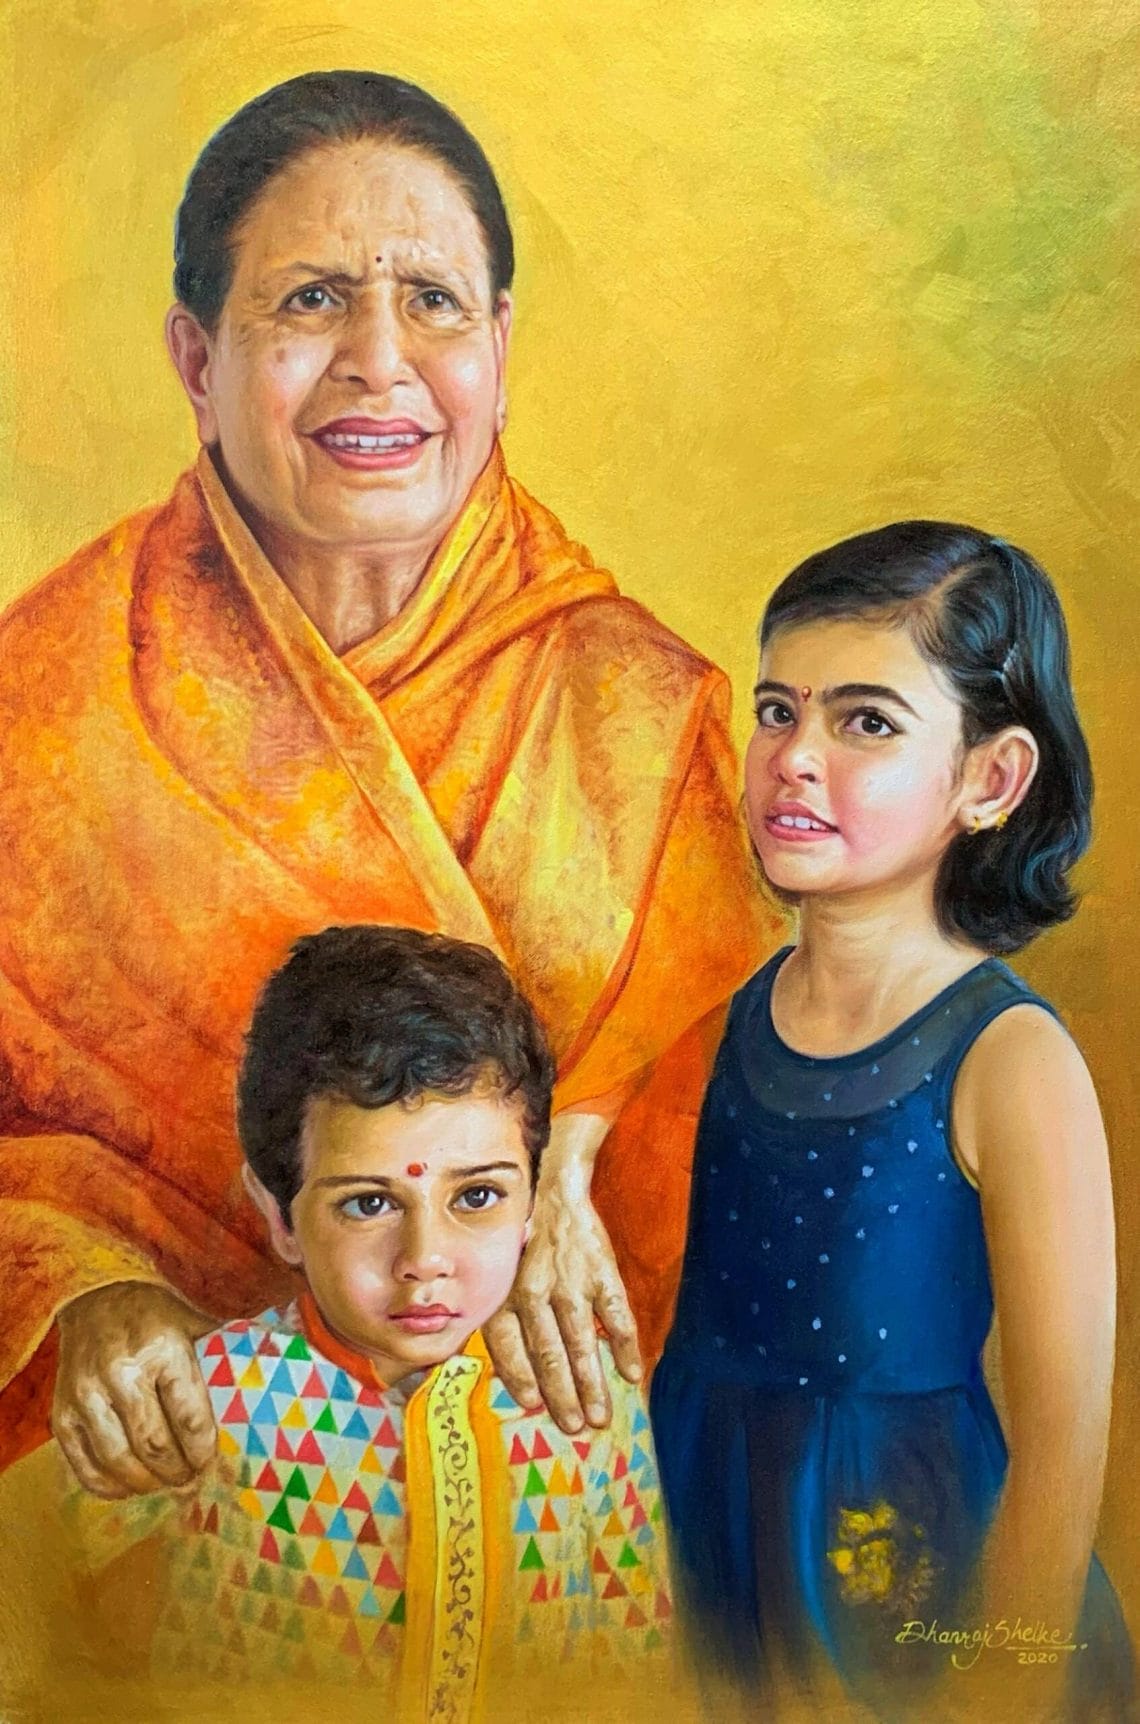 Meet India's First Artist "Dhanraj Sagar Shelke" making Oil Portraits with 24 Karat Gold Plating